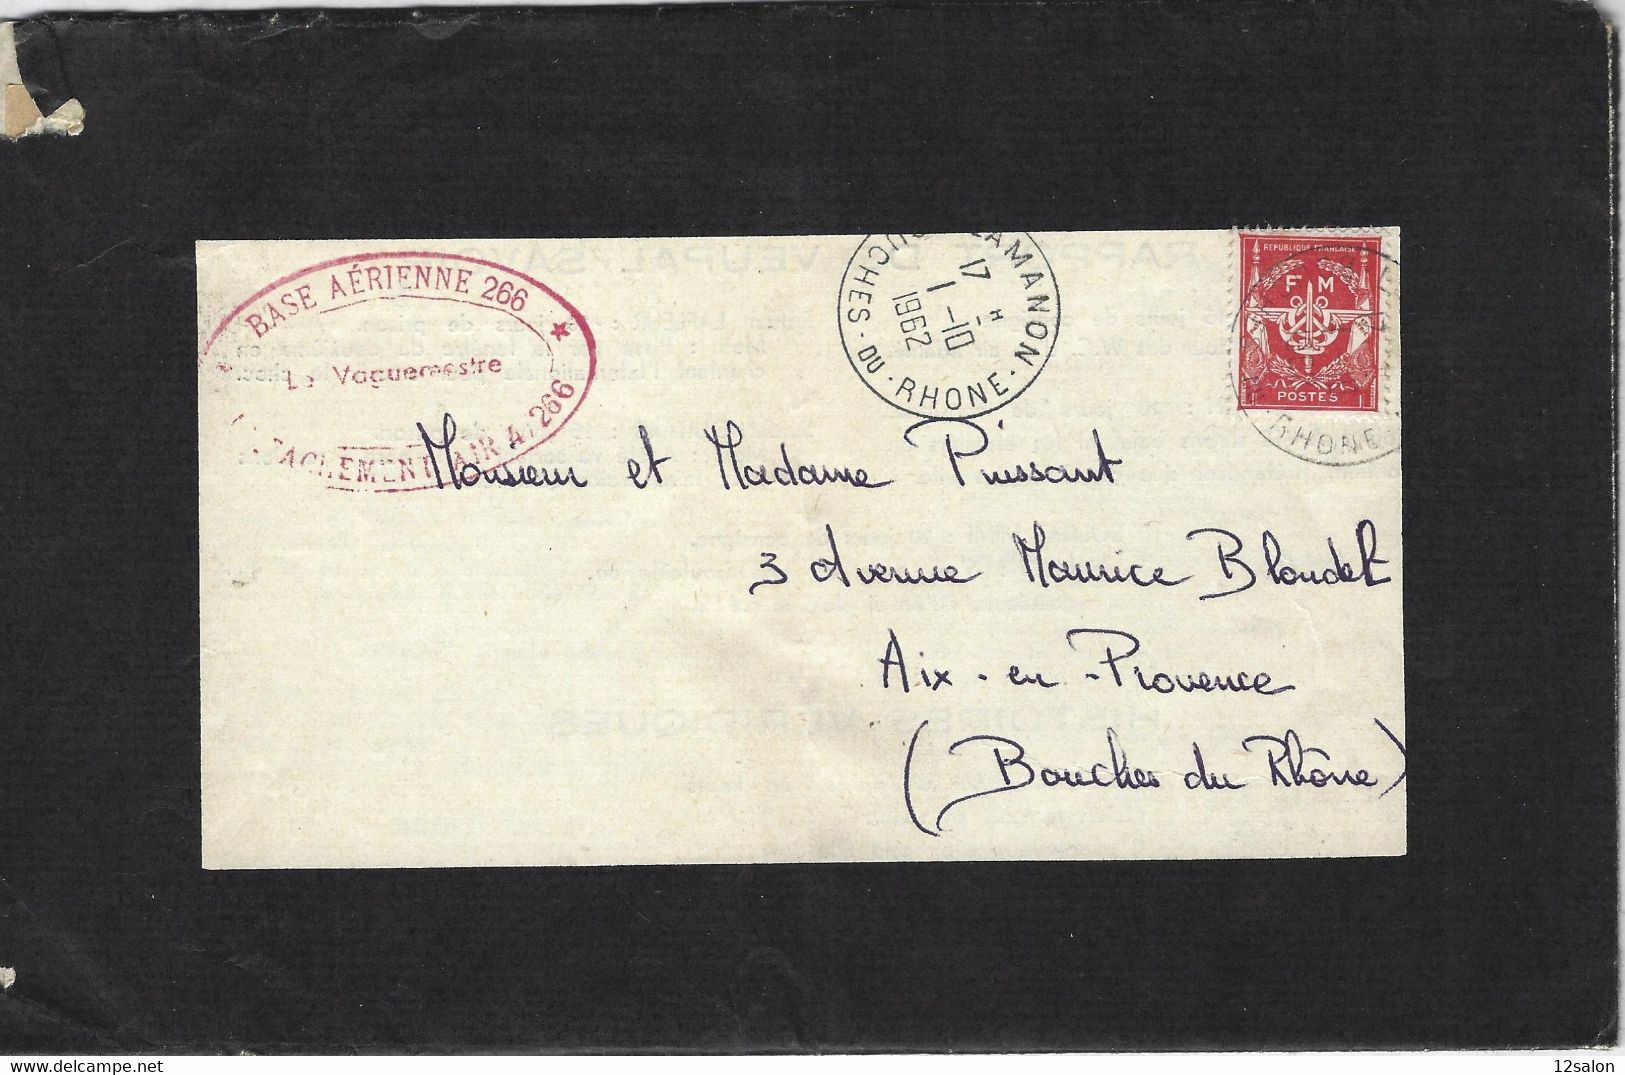 FRANCE LAMANON BASE AERIENNE 266 LETTRE DU PERE CENT CONTINGENT 61 62 VOIR SCANN - Army Postmarks (before 1900)